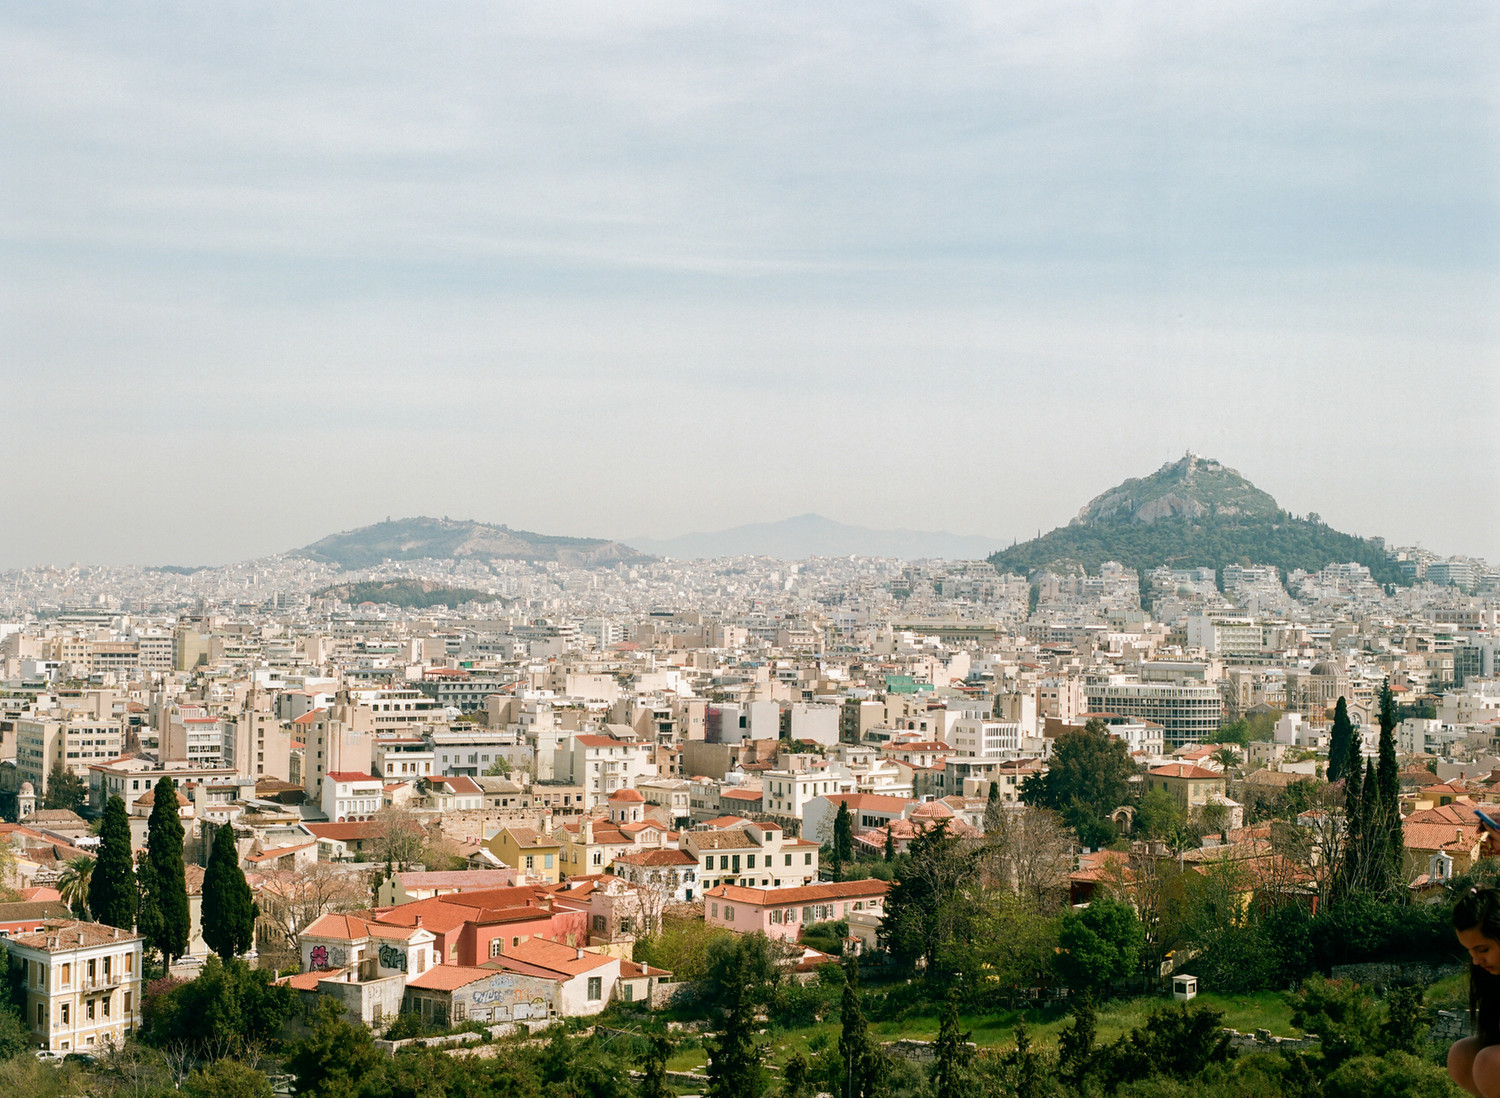 AthensP160120-005-2.jpg